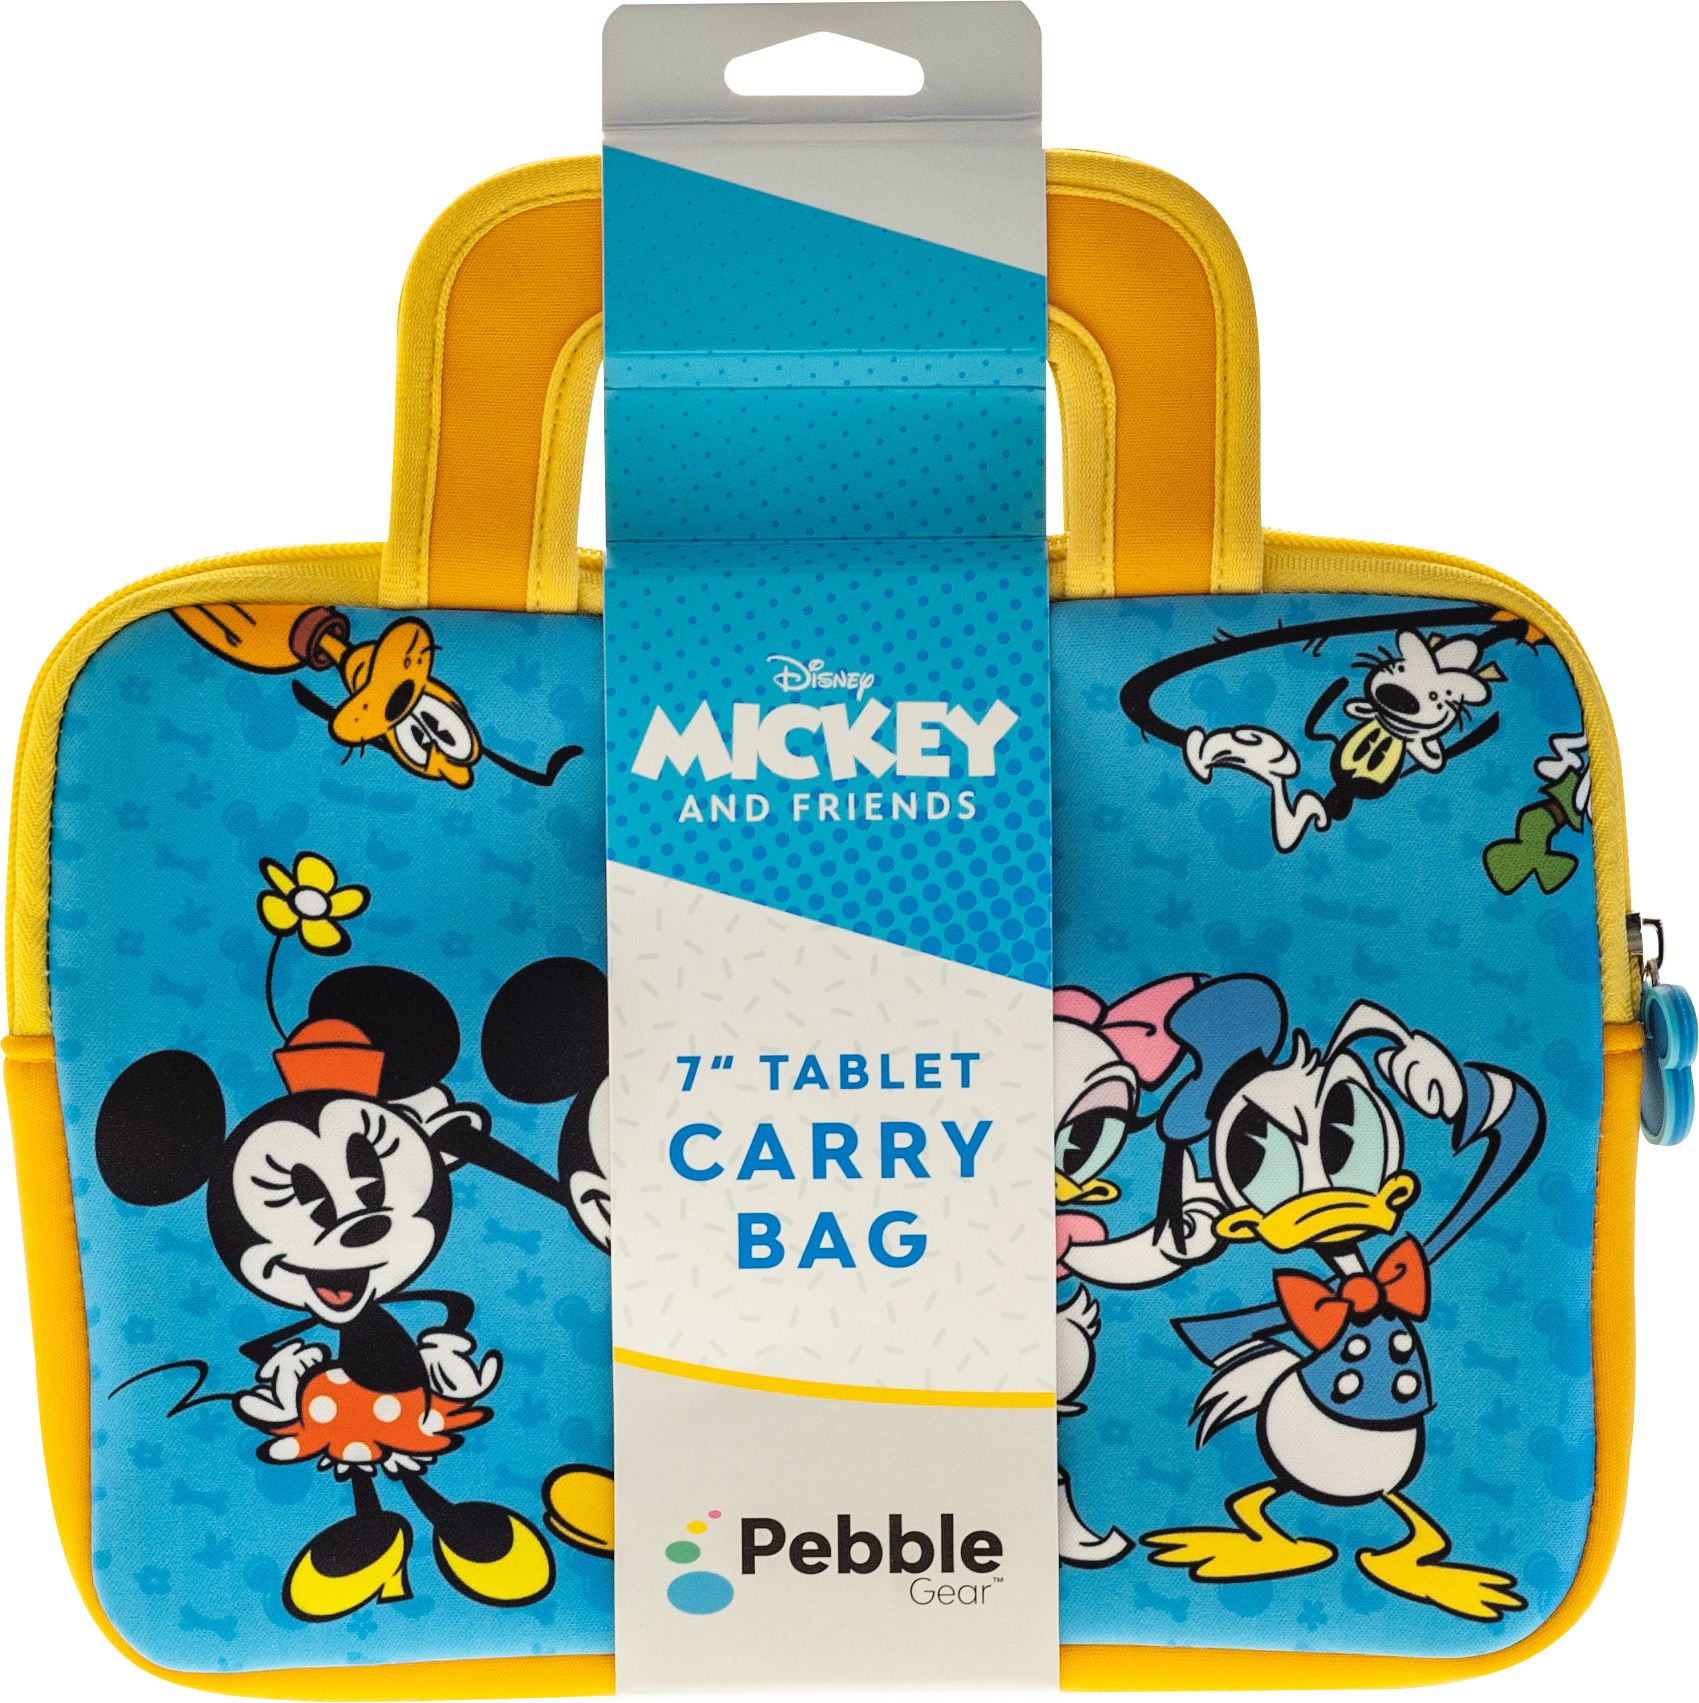 Disney Stoney Clover Lane Bag - Disney Princess - Large Pouch